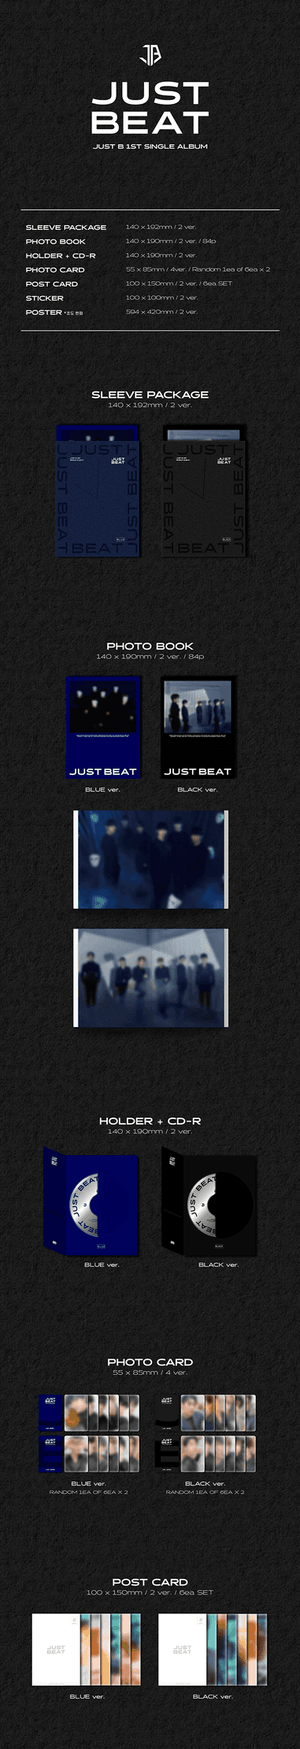 JUST B - Just Beat